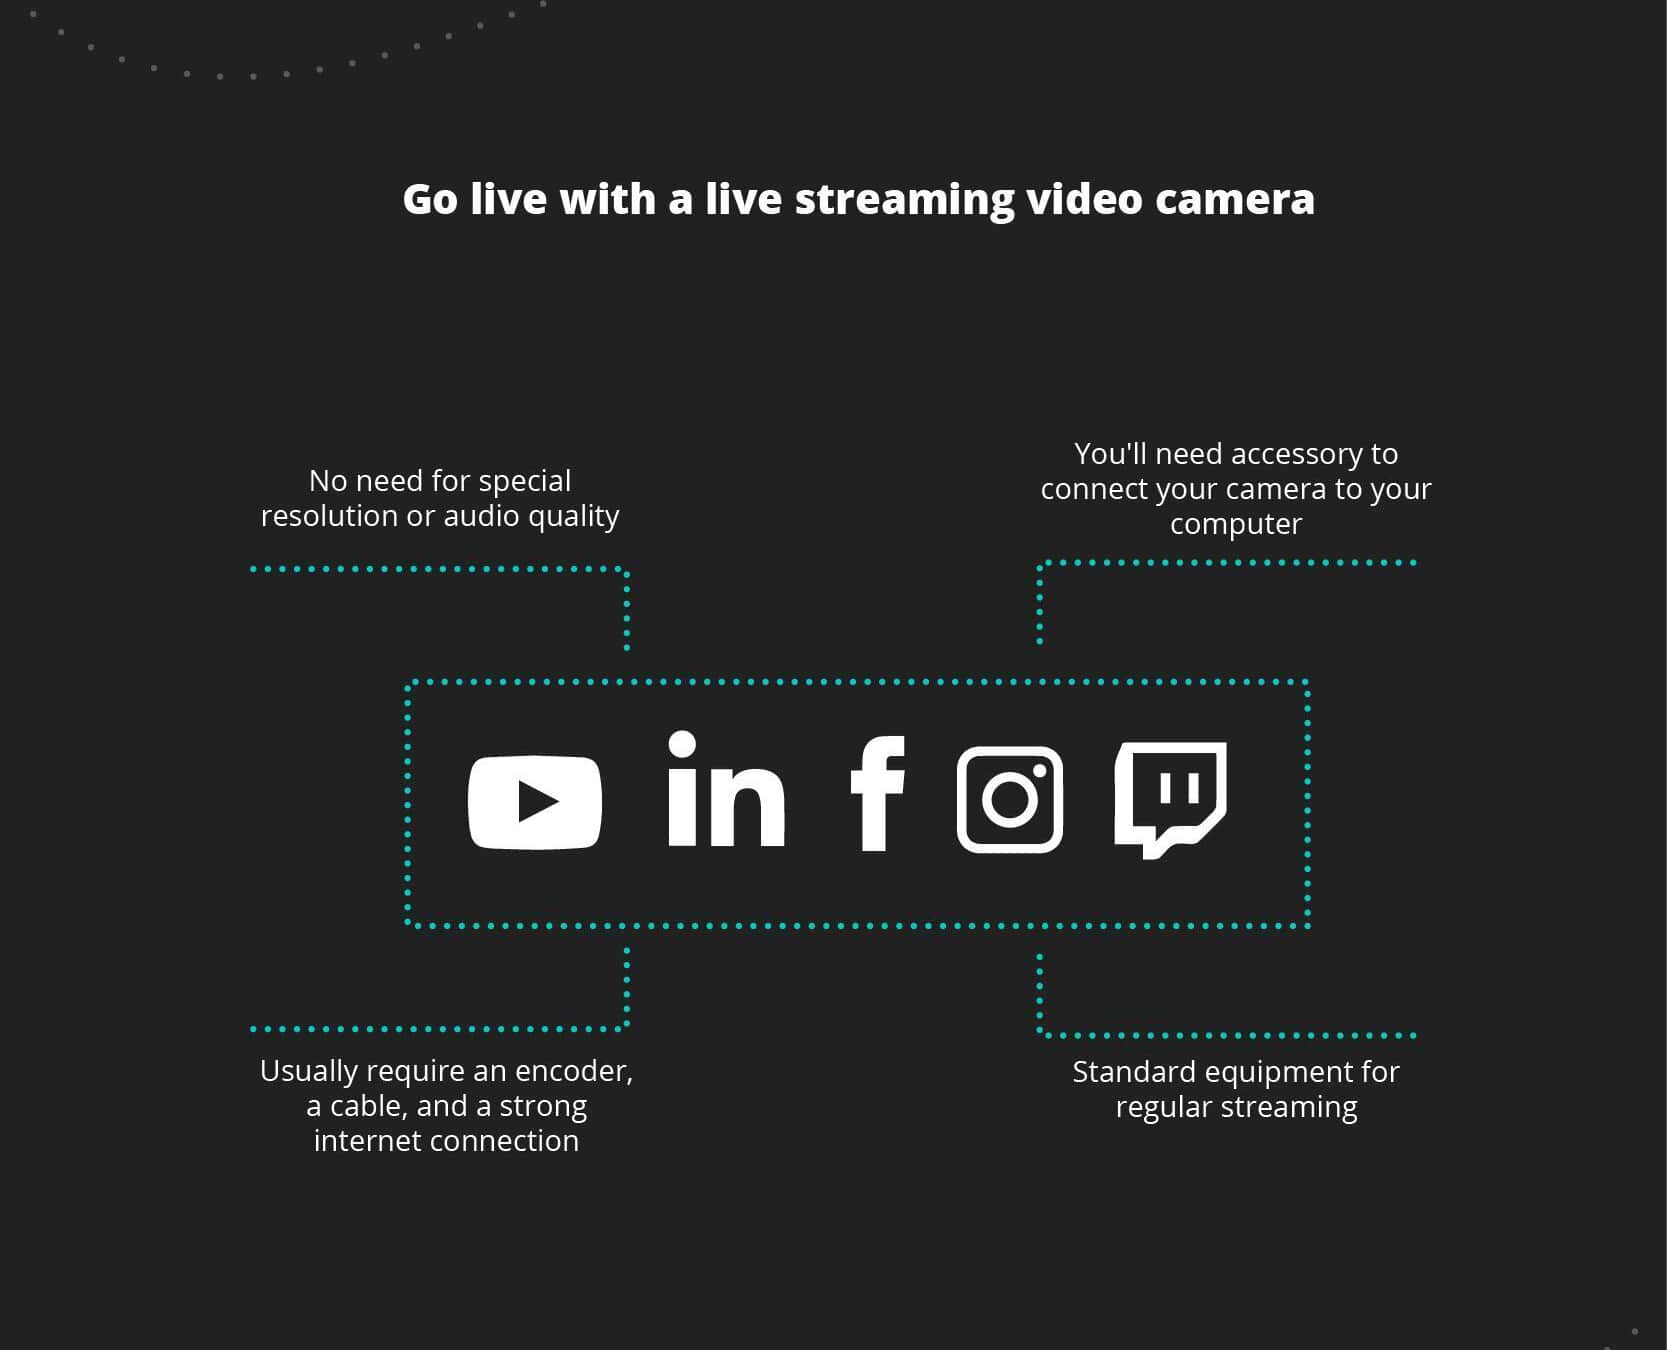 Choose a streaming platform